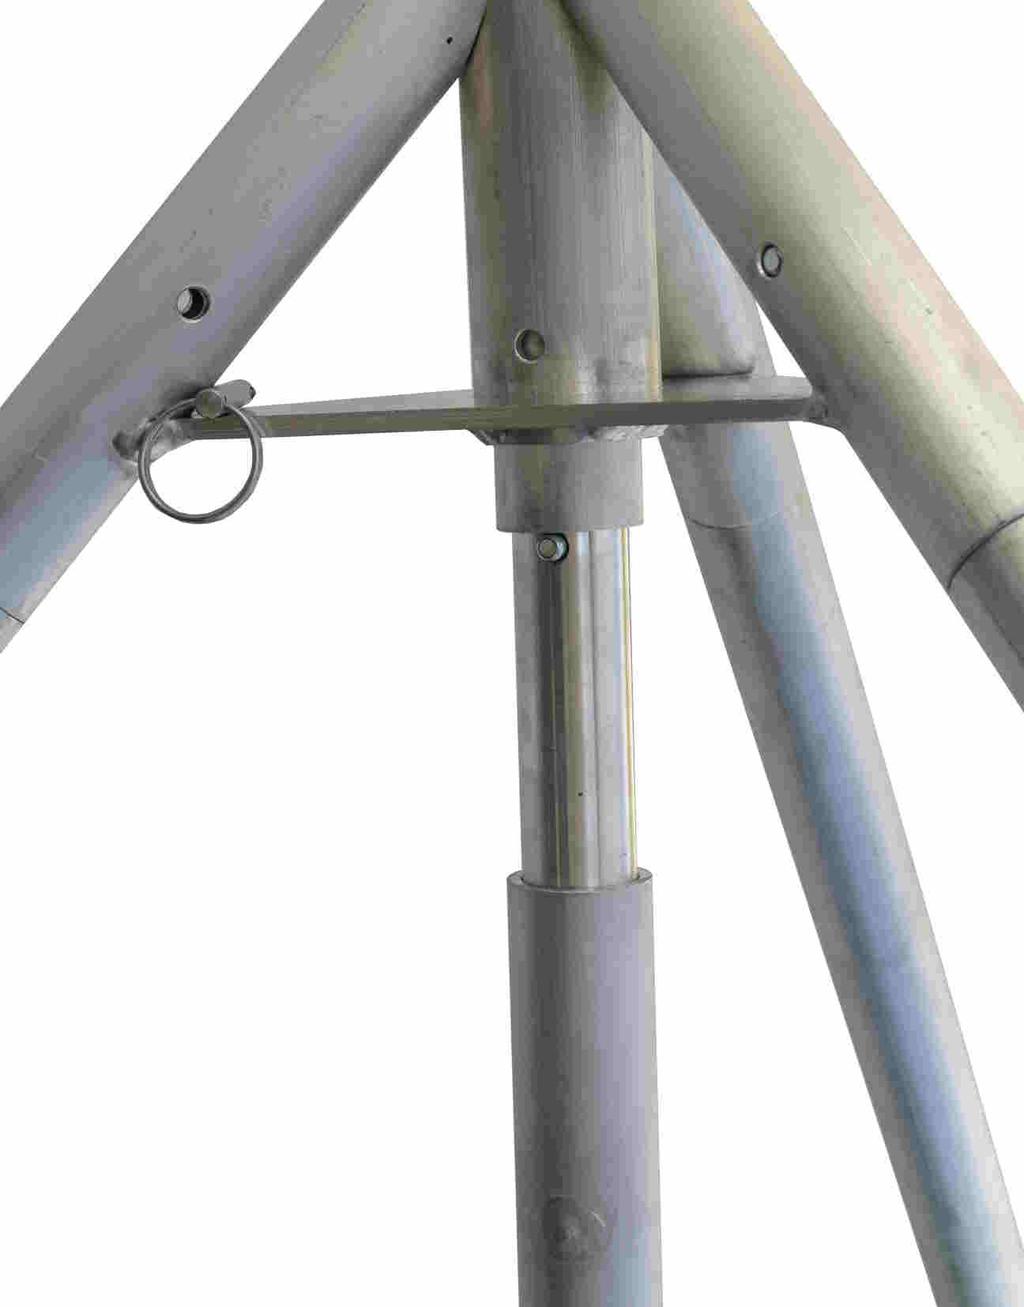 Attach Equipment 1. Attach equipment to the tripod mast, such as a wind sensor, light, or antenna. 2. Align the equipment before erecting the mast. 3. Attach equipment to the tripod mounting mast.